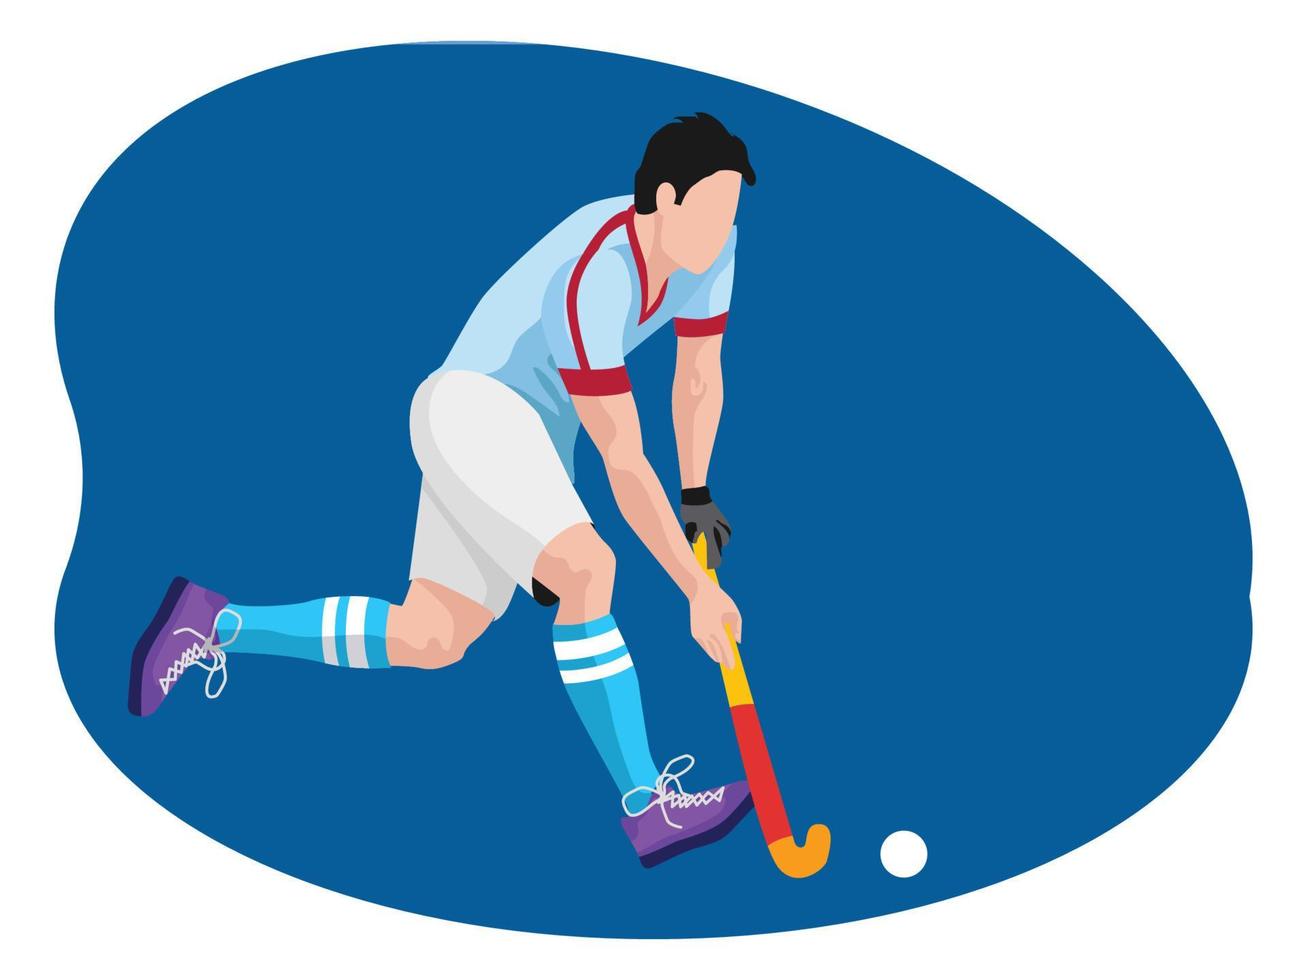 Male hockey player illustration vector